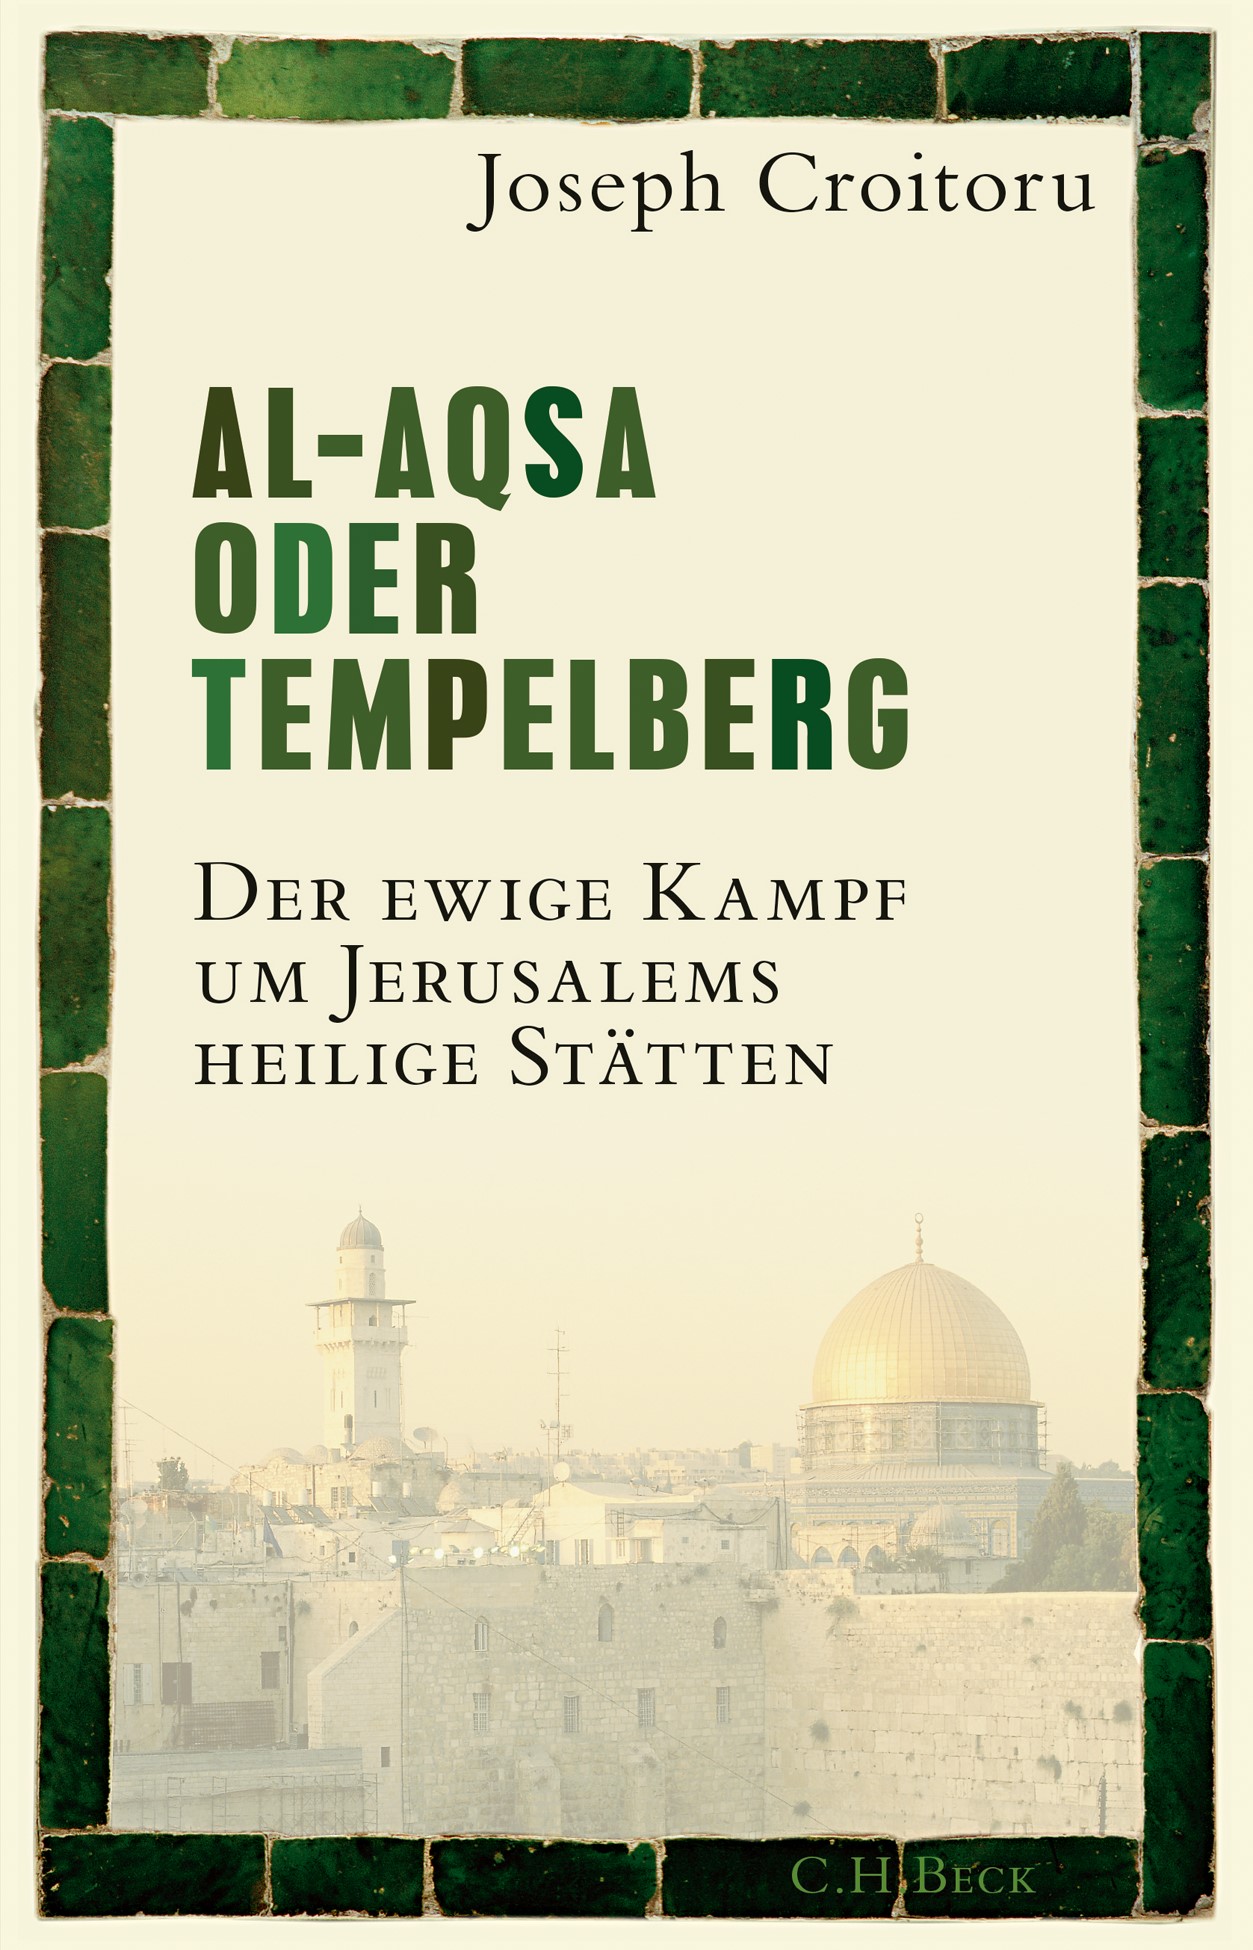 Buchcover: Joseph Croitoru: „Al-Aqsa oder Tempelberg. Der ewige Kampf um Jerusalems heilige Stätten“. (Foto: Verlag C.H.Beck)